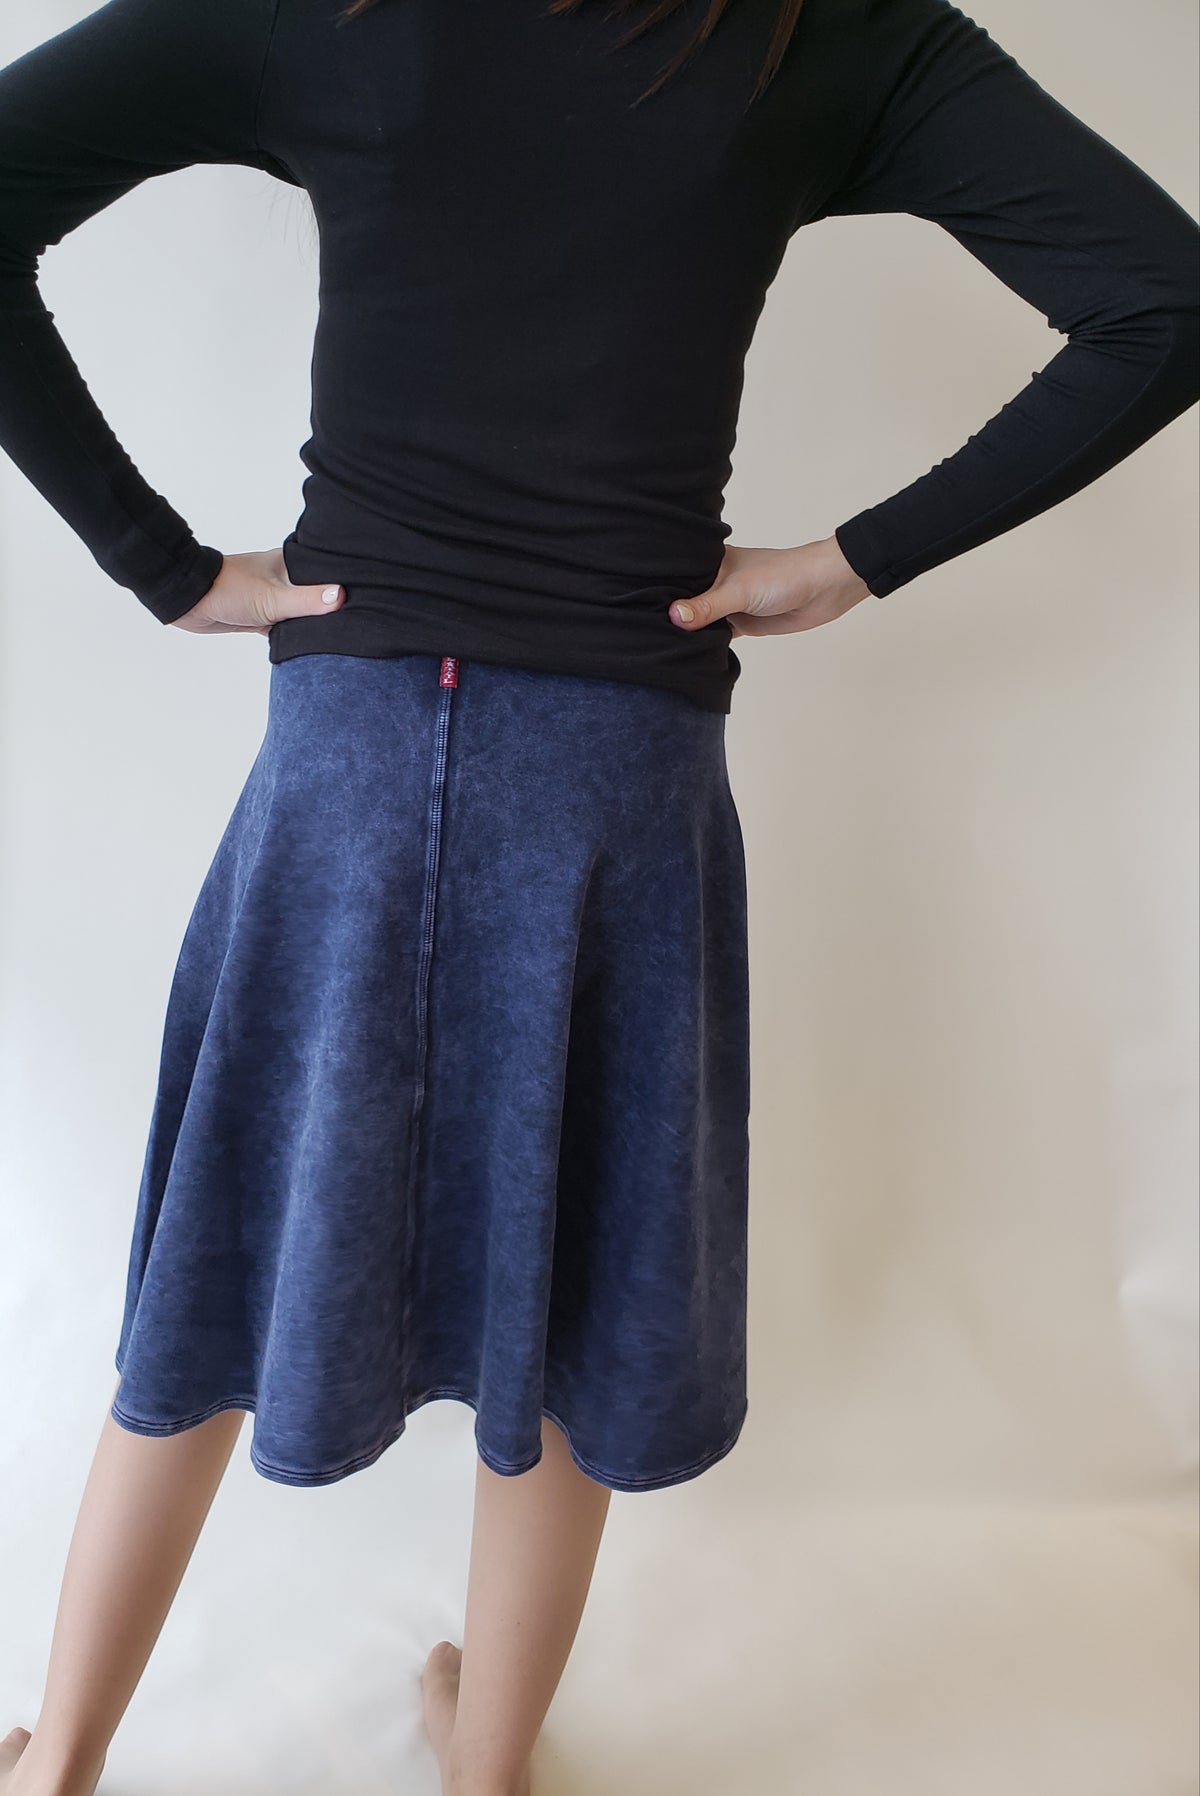 Hardtail Valentina Knee Skirt-Skirt-Mementos